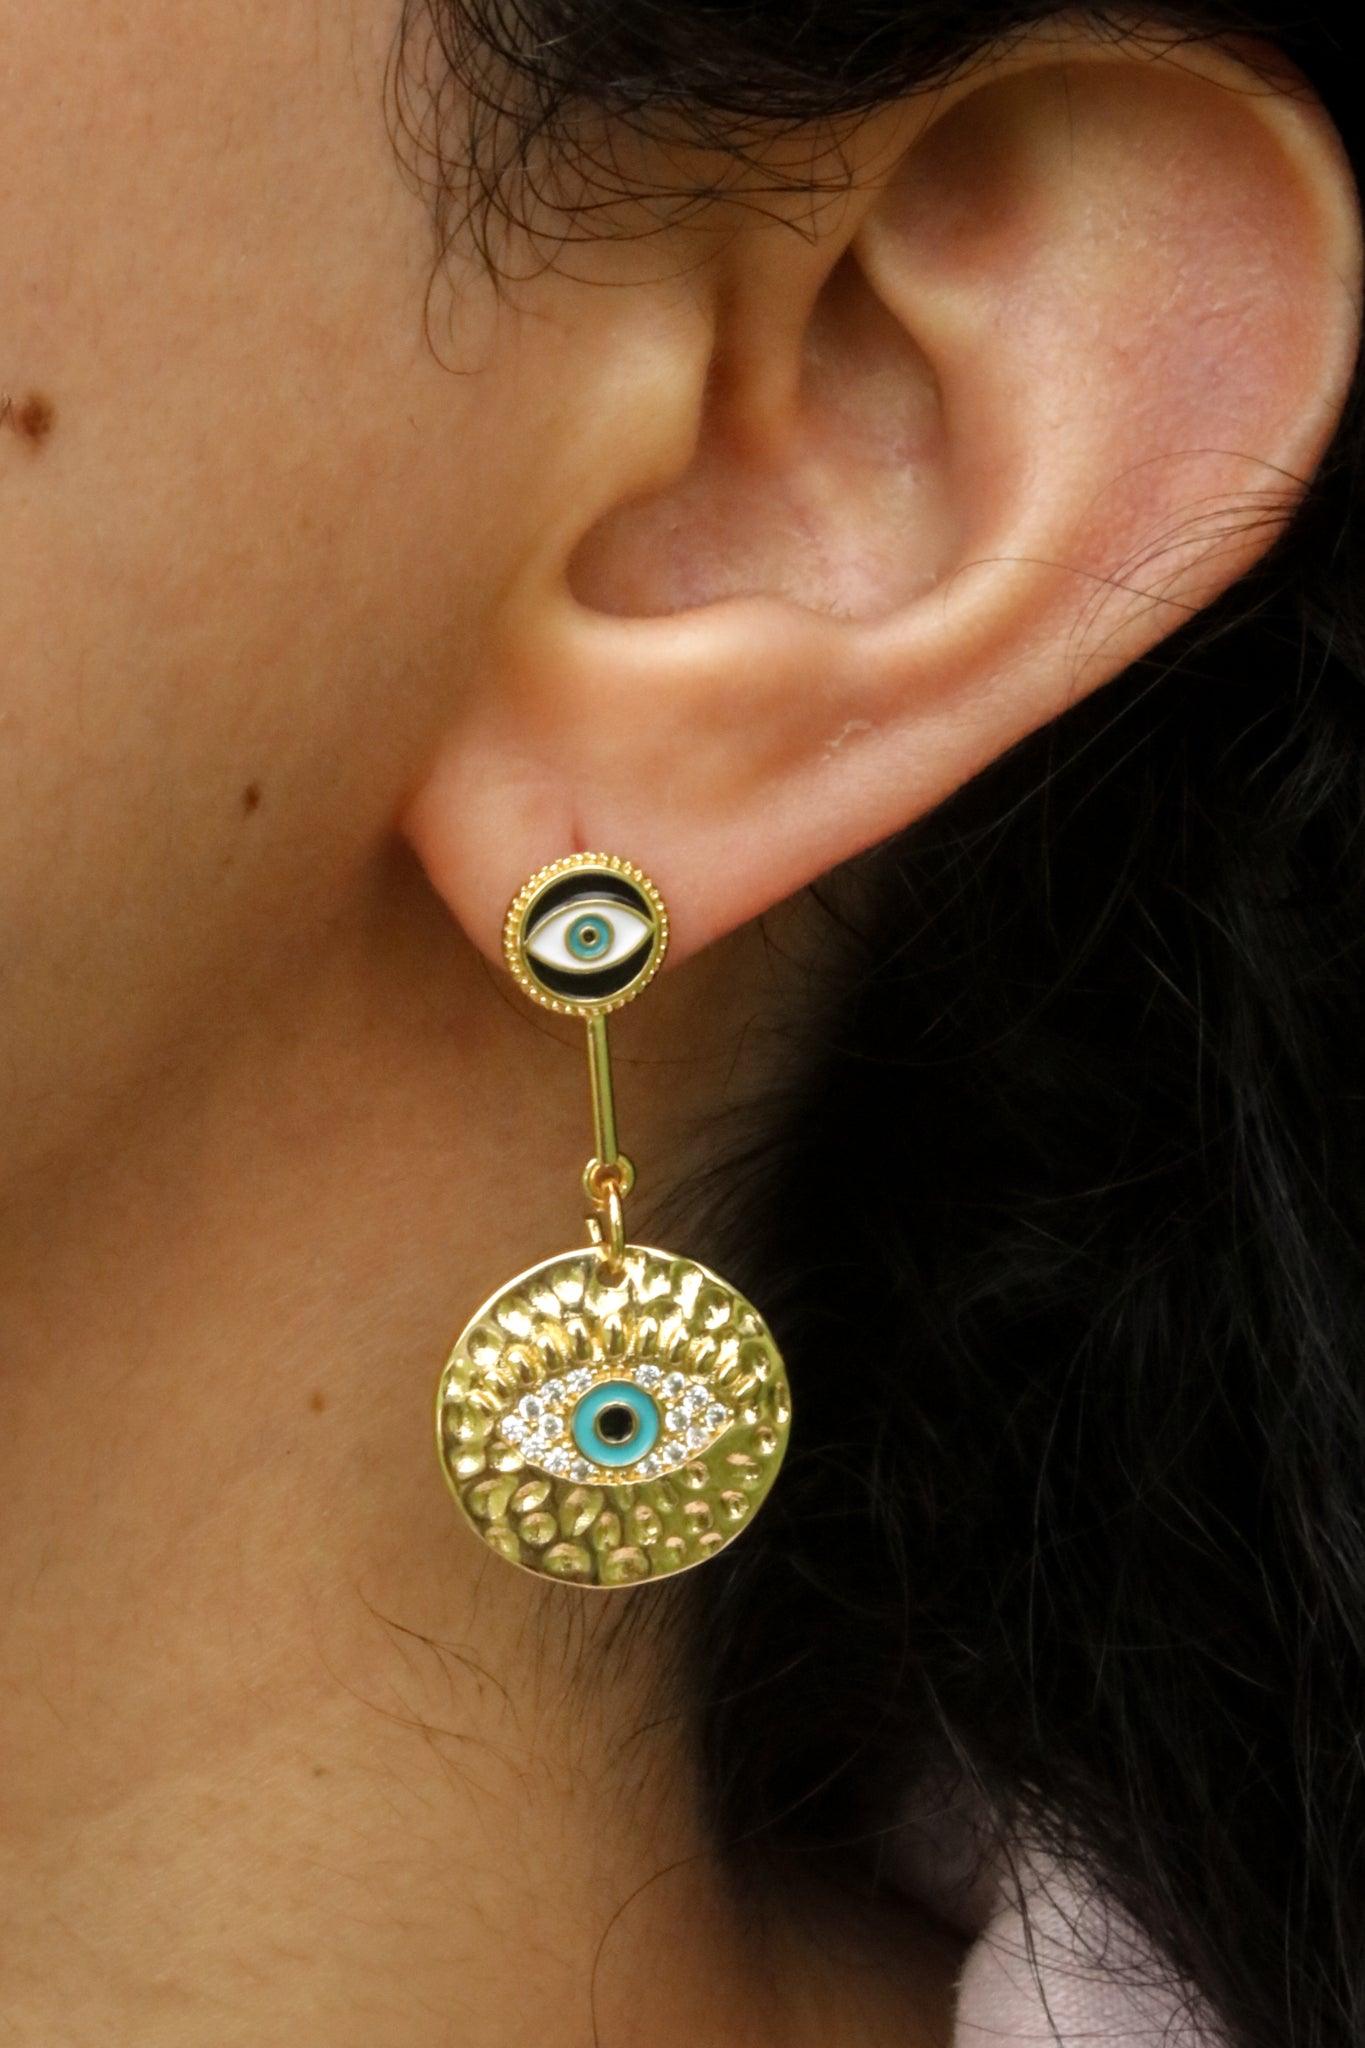 Buy Now Stud earrings for Women @ Best Price